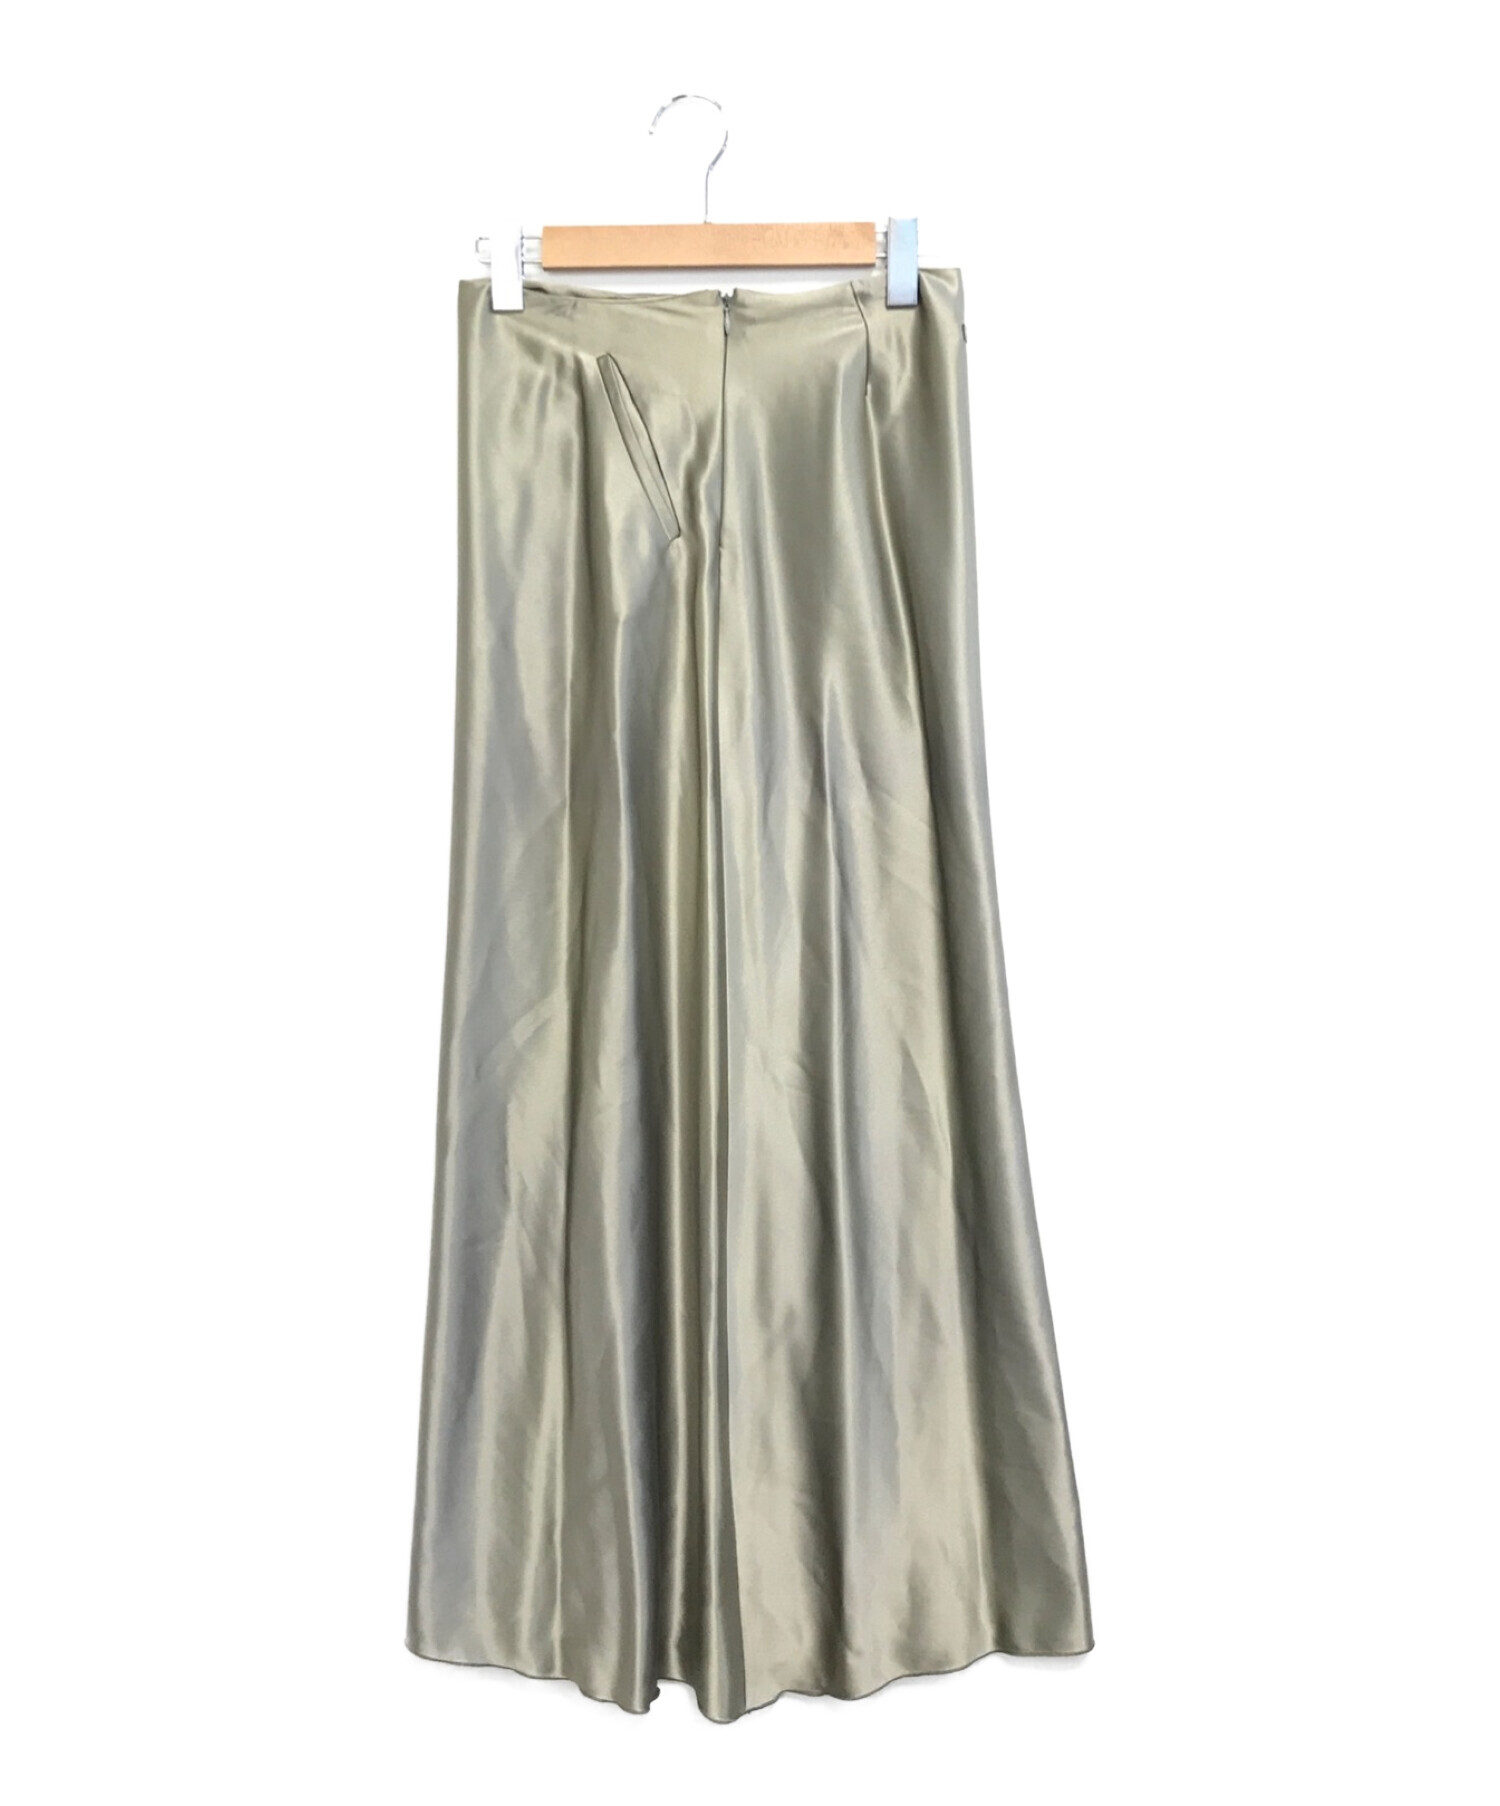 Jean Paul Gaultier FEMME (ジャンポールゴルチェフェム) サイドプリーツサテンスカート オリーブ サイズ:M